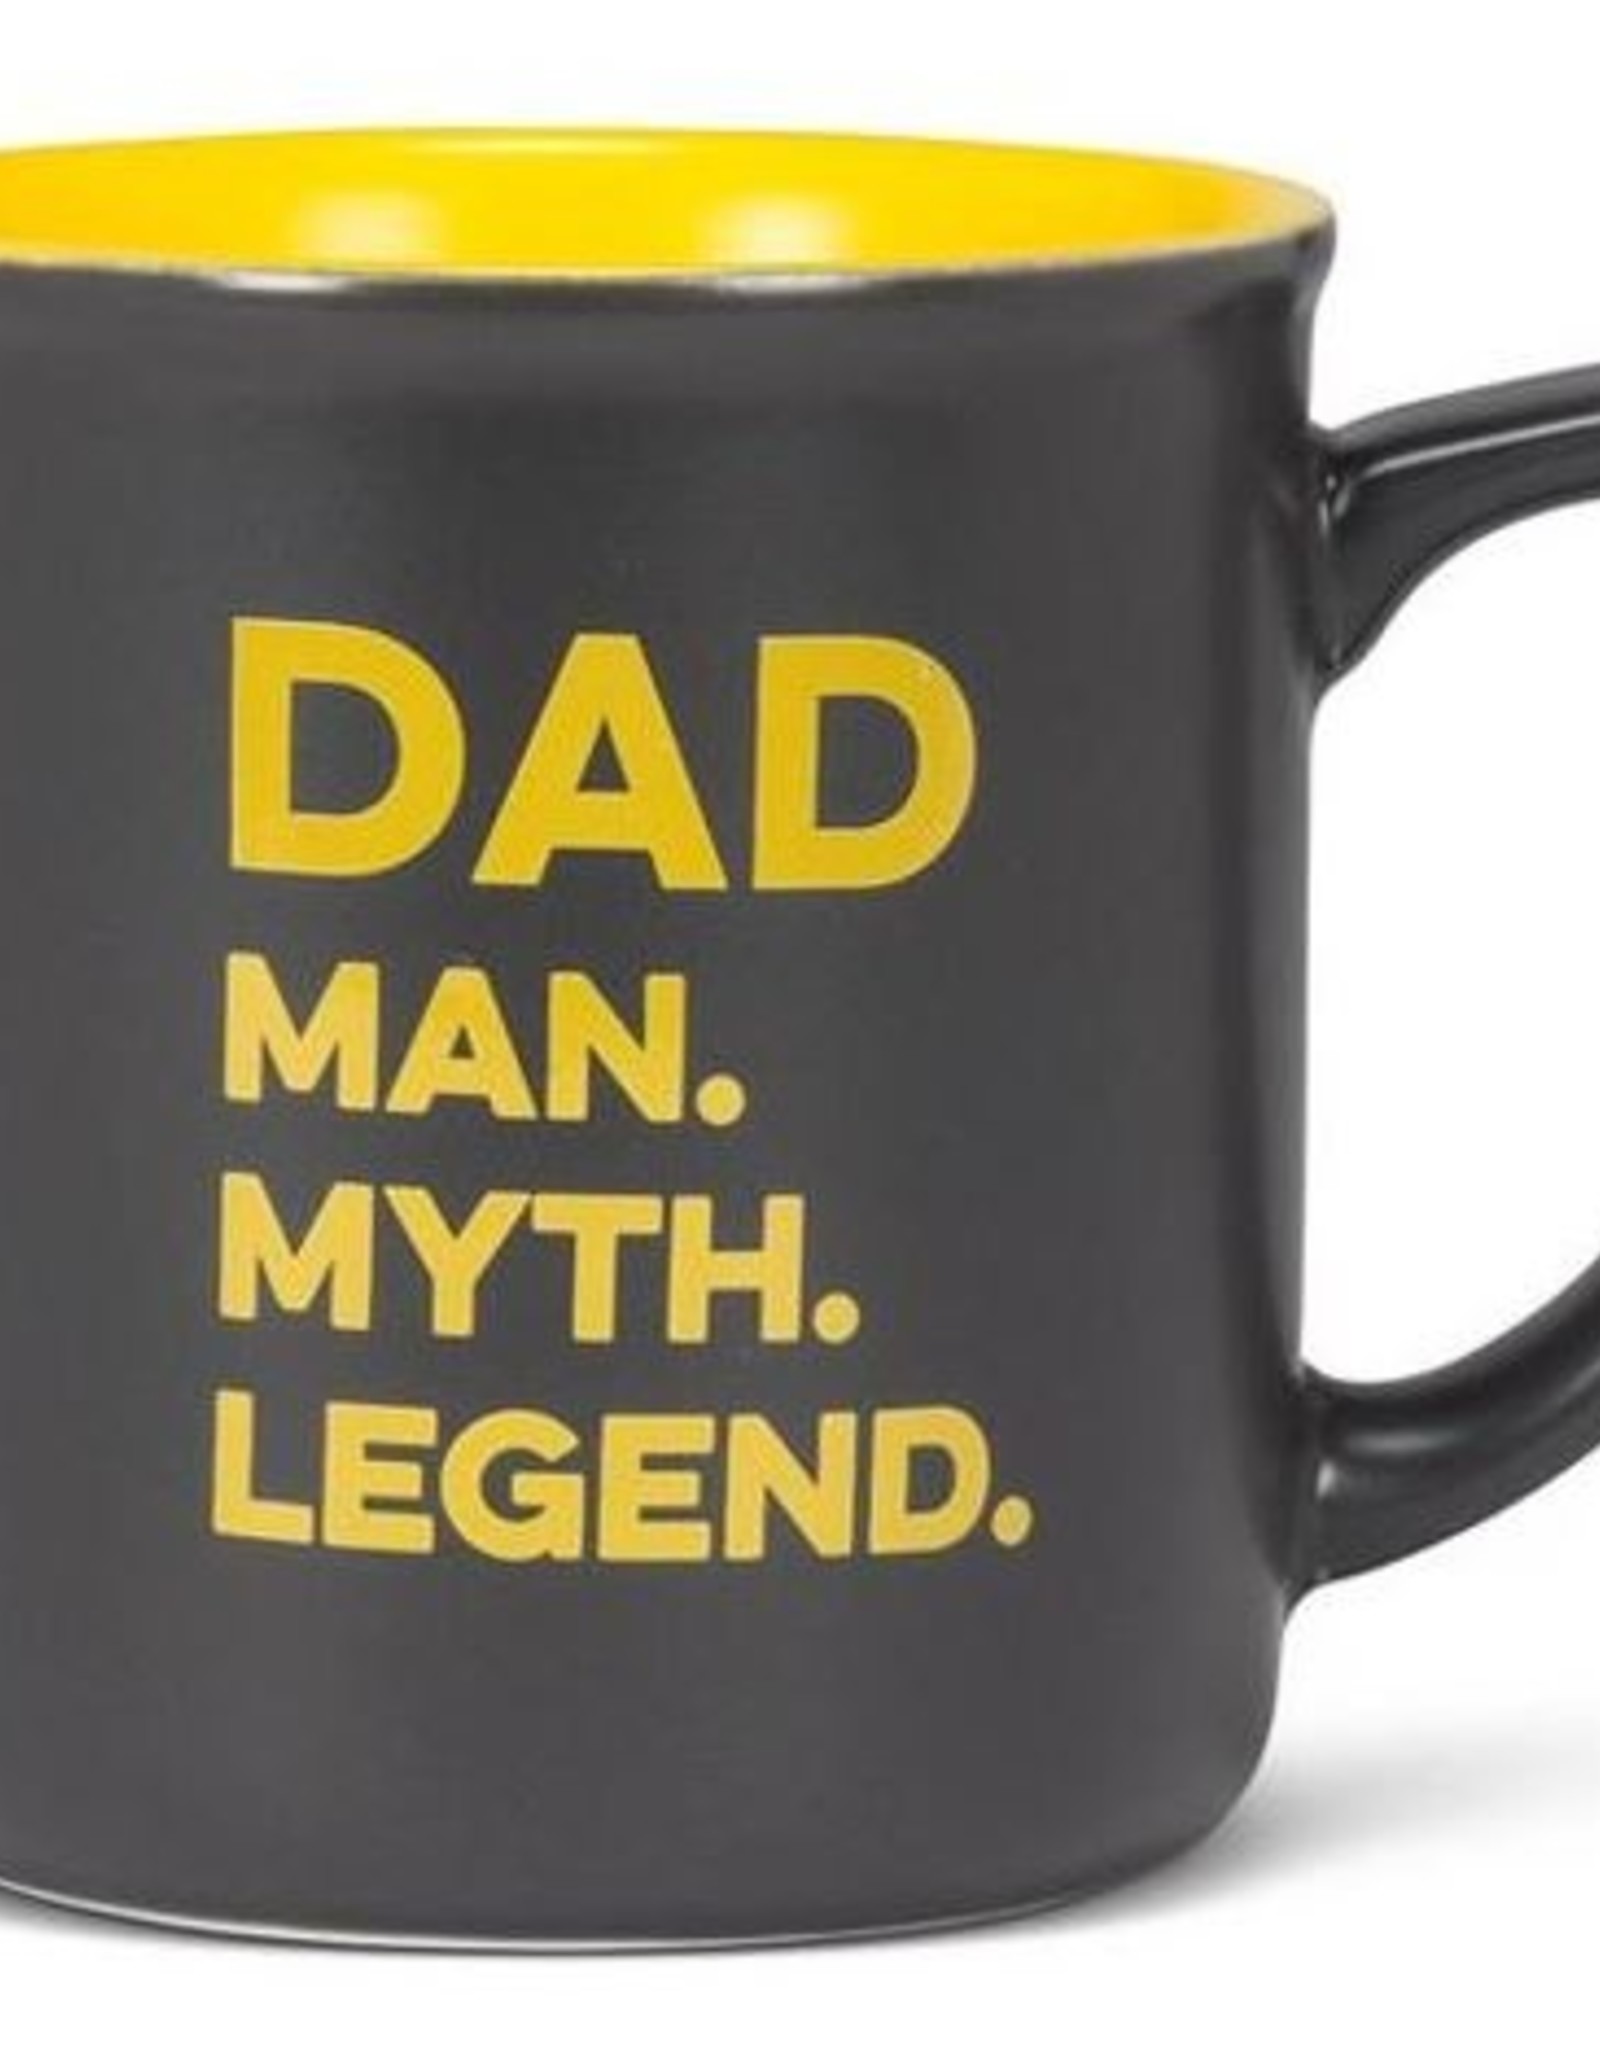 Abbott Mug - Dad Legend